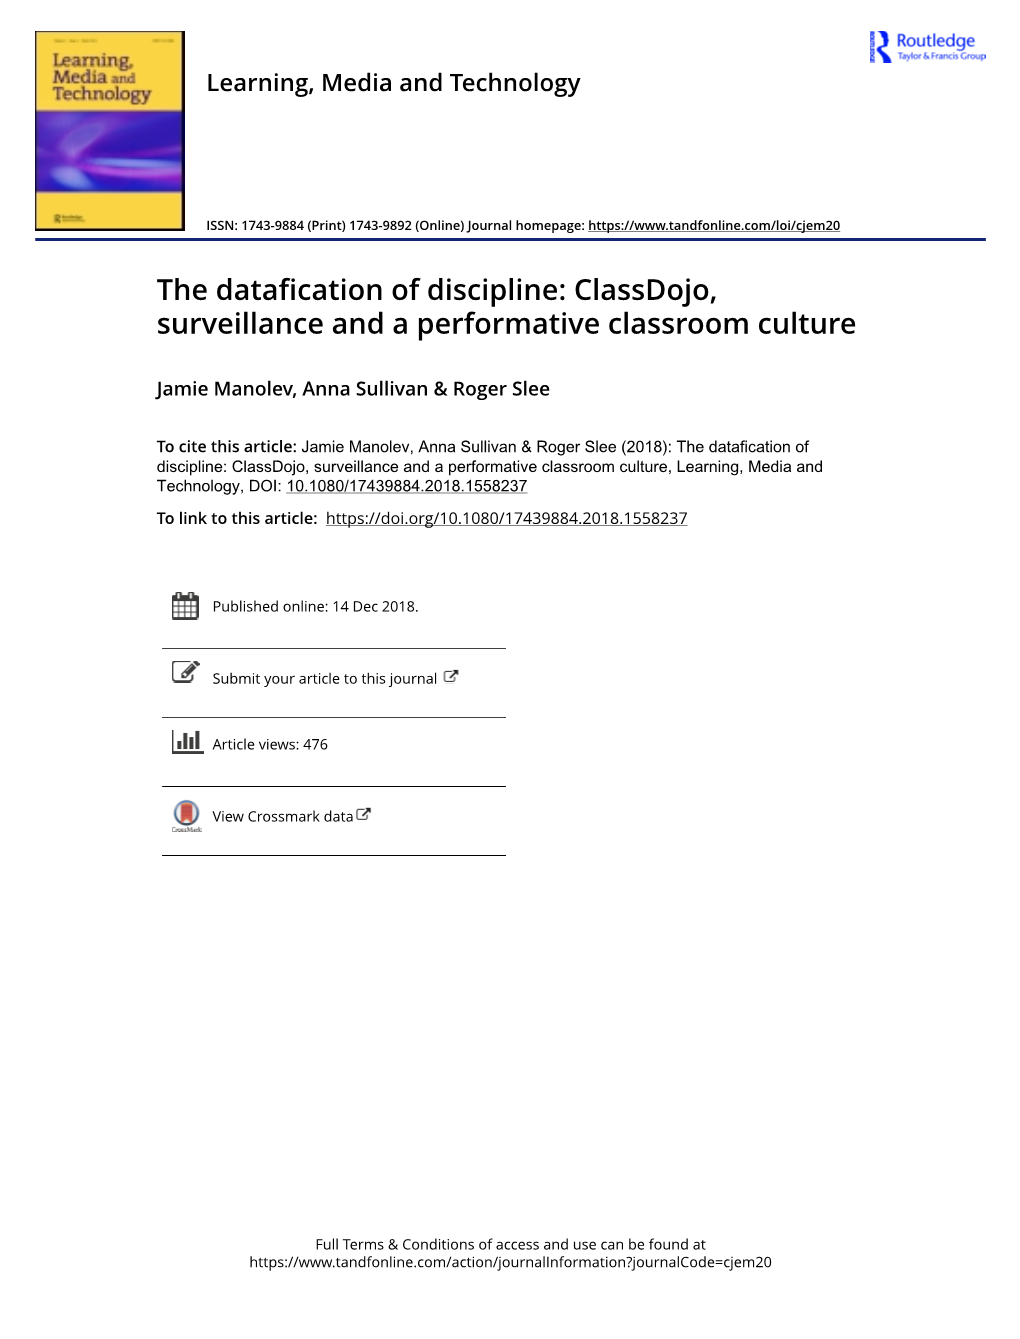 Classdojo, Surveillance and a Performative Classroom Culture